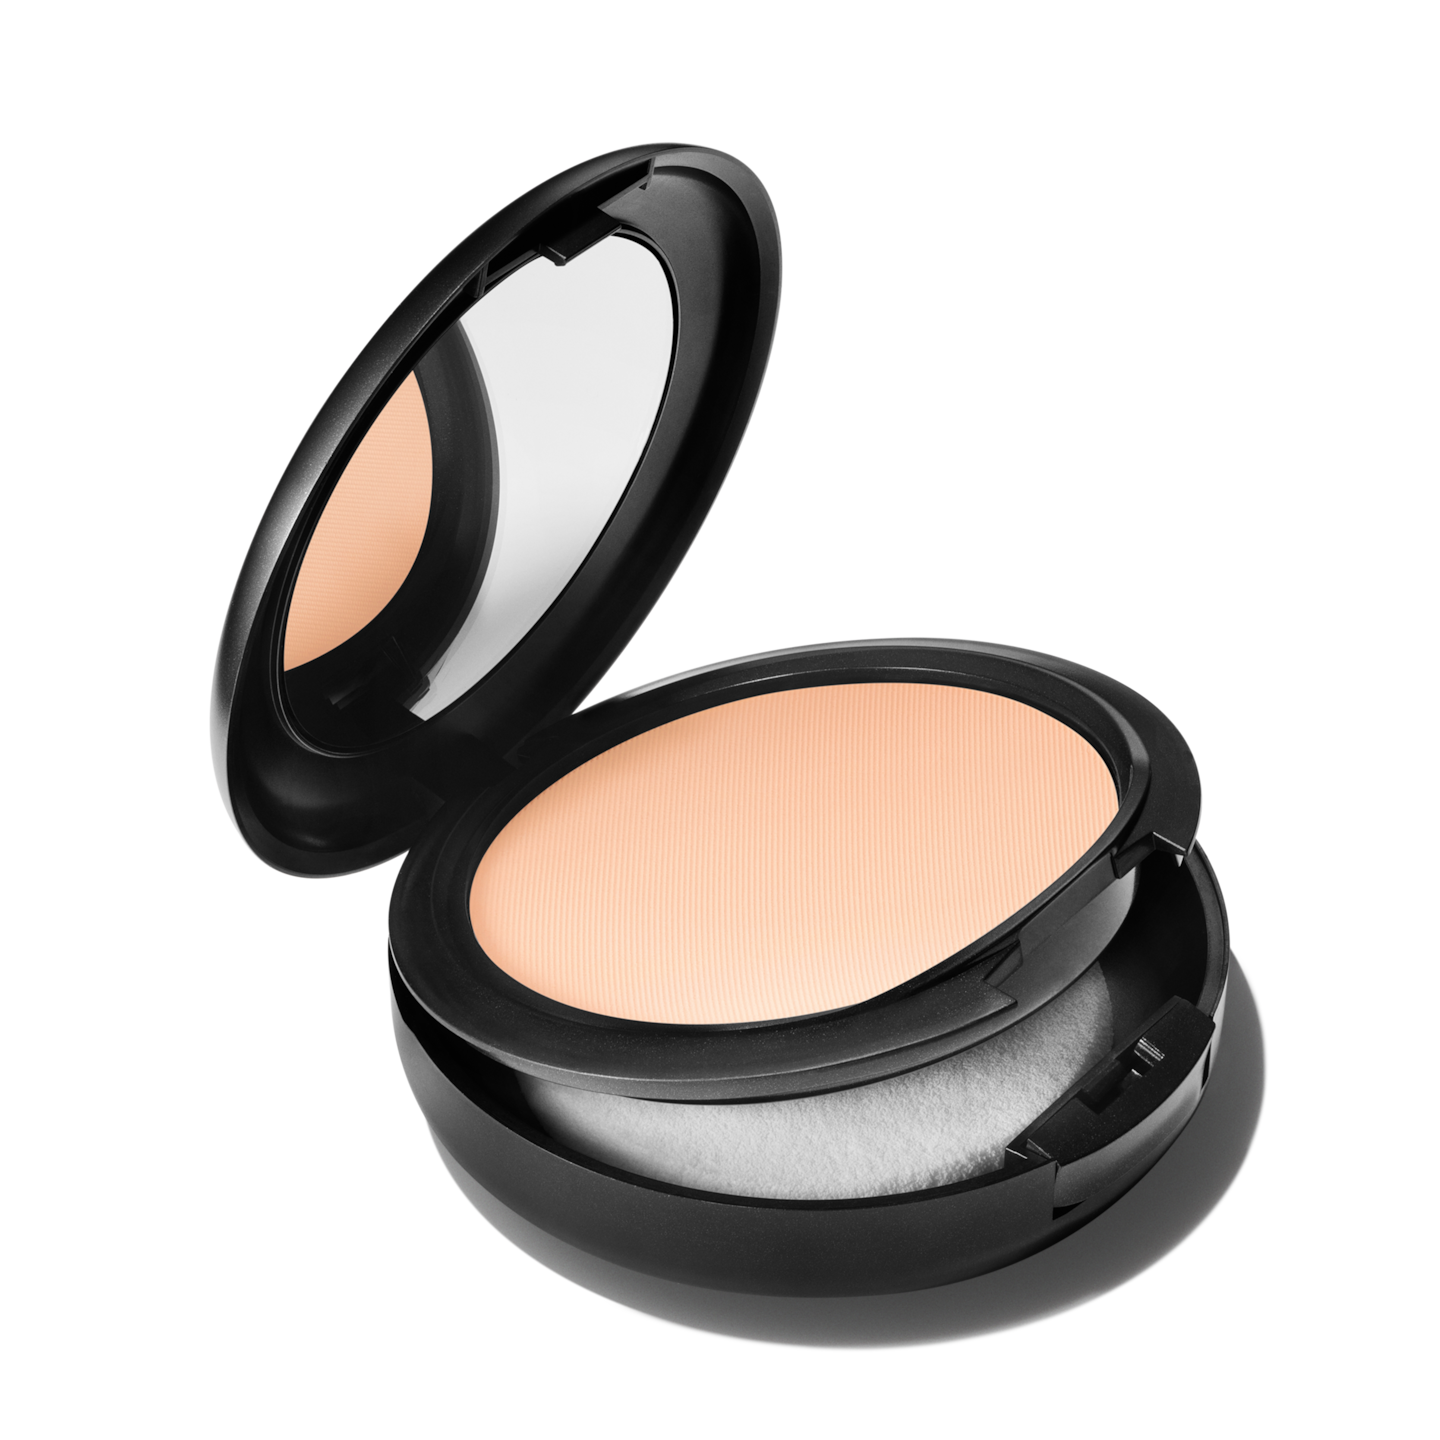 Studio Fix Powder Plus NC35, | Foundation Shades NW25 MAC Cosmetics Official - | Including Site 53 NC40 